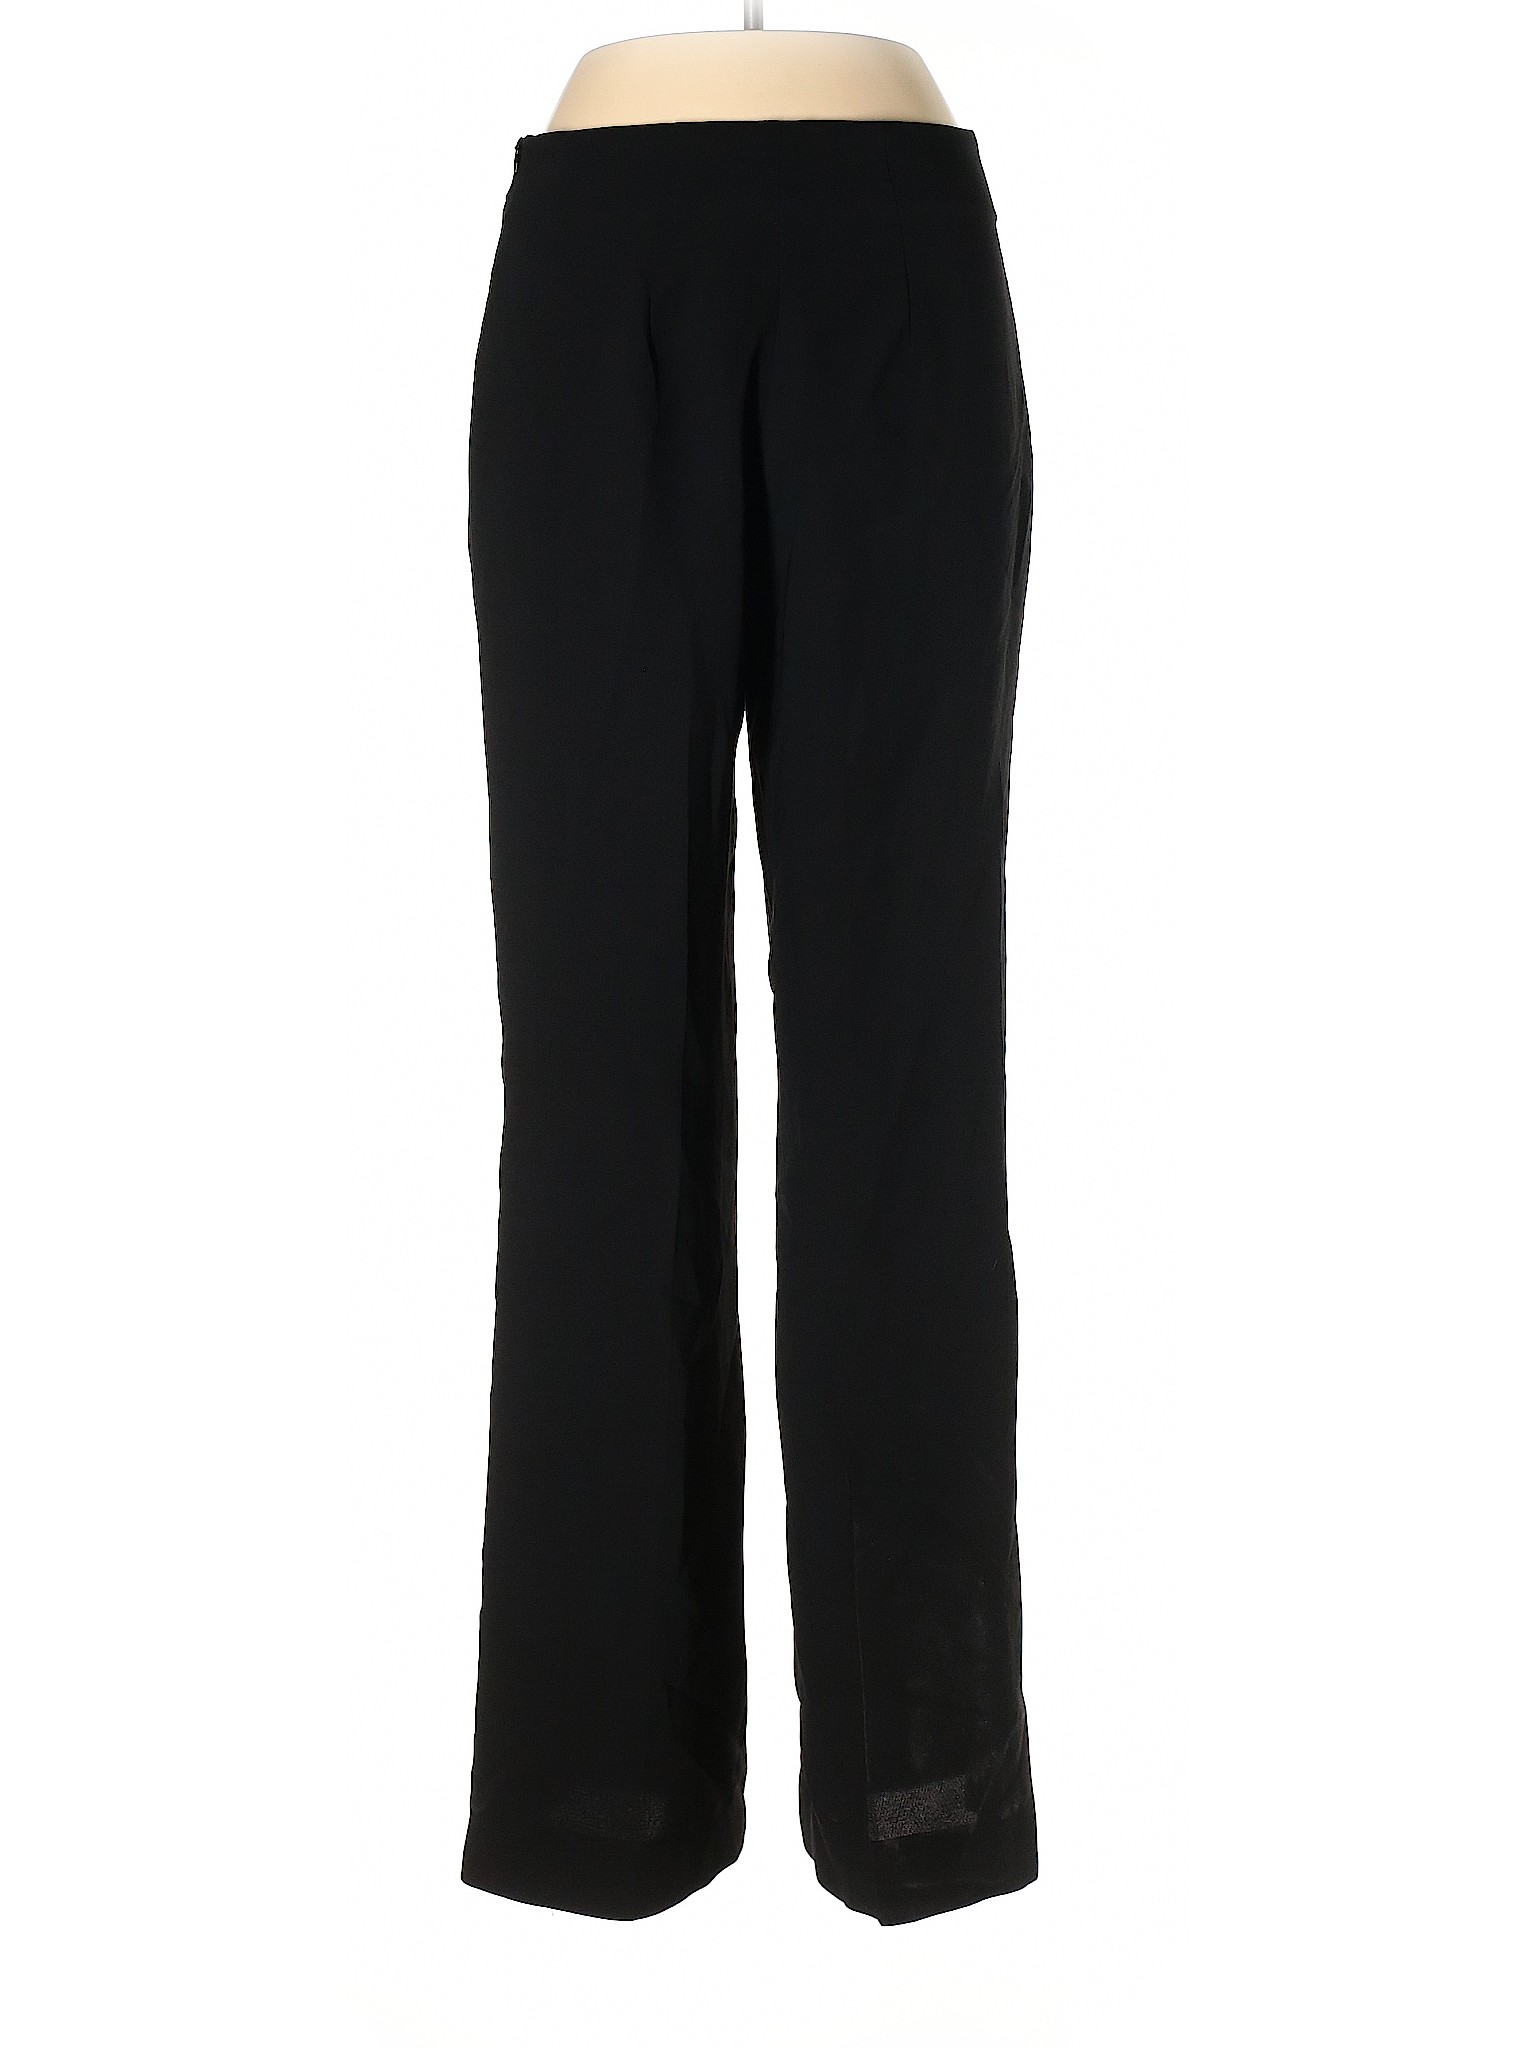 Talbots Women Black Dress Pants 10 | eBay